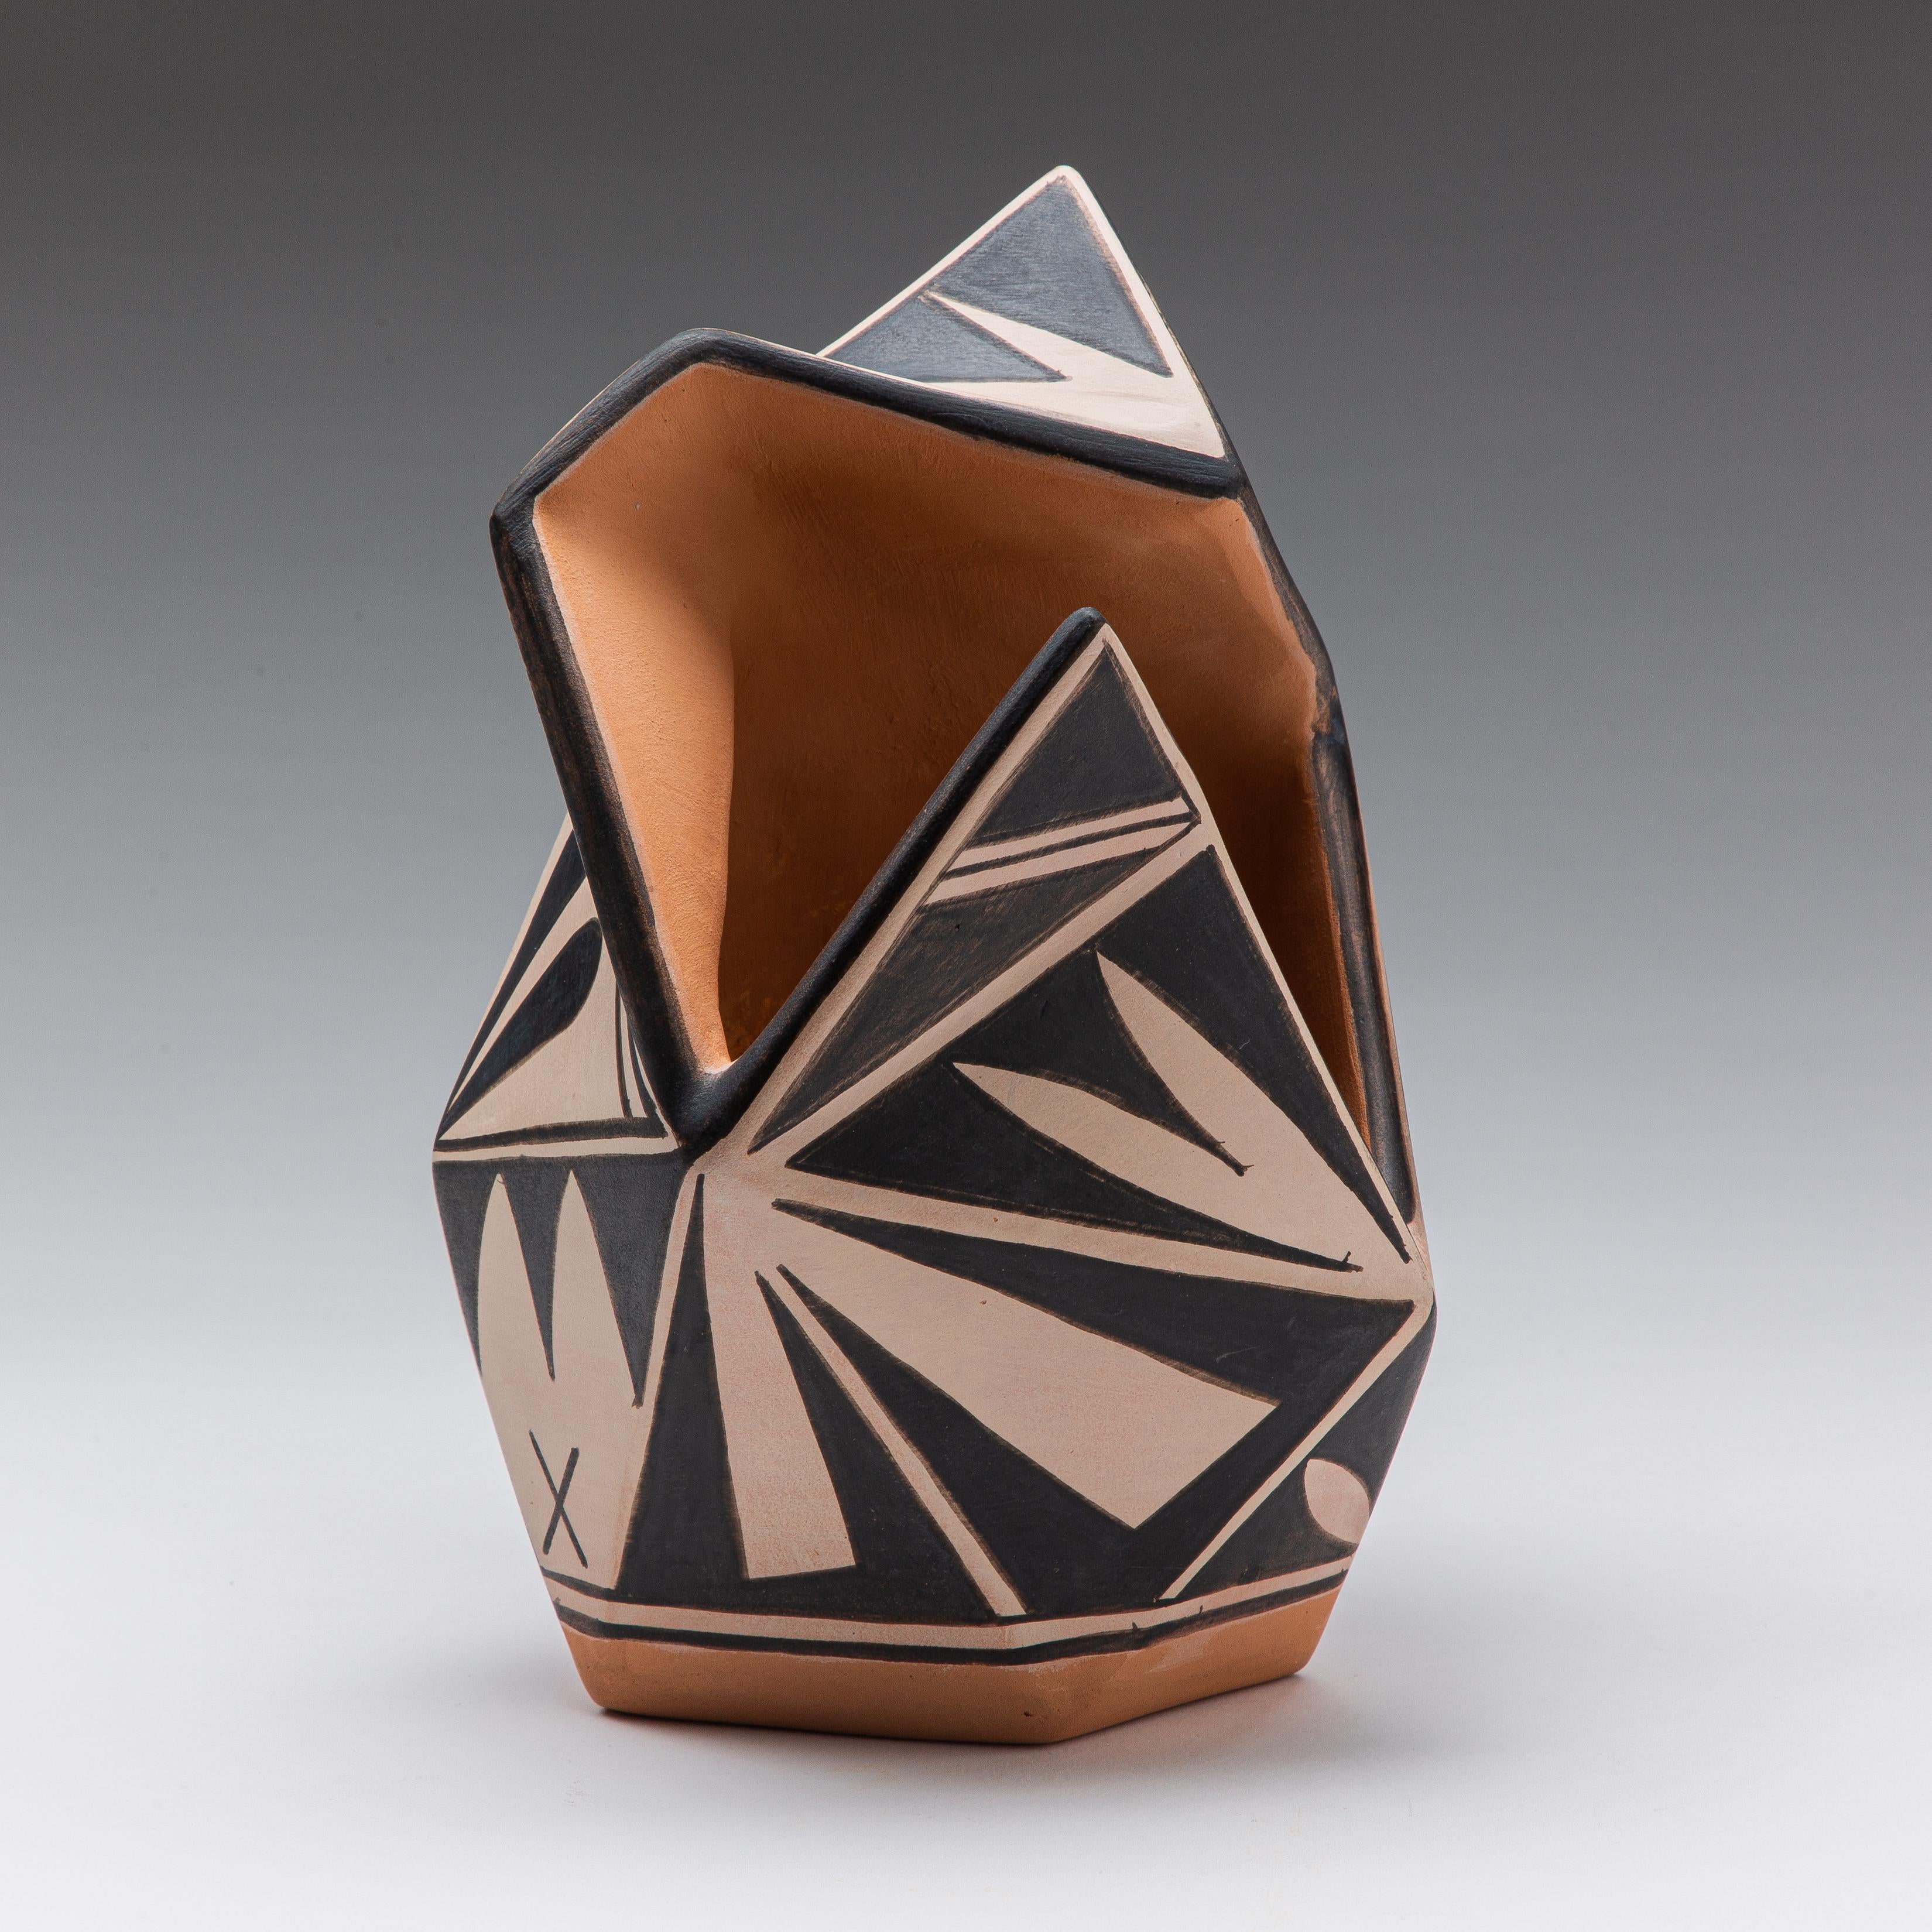 Jeff Suina Abstract Sculpture - Shard